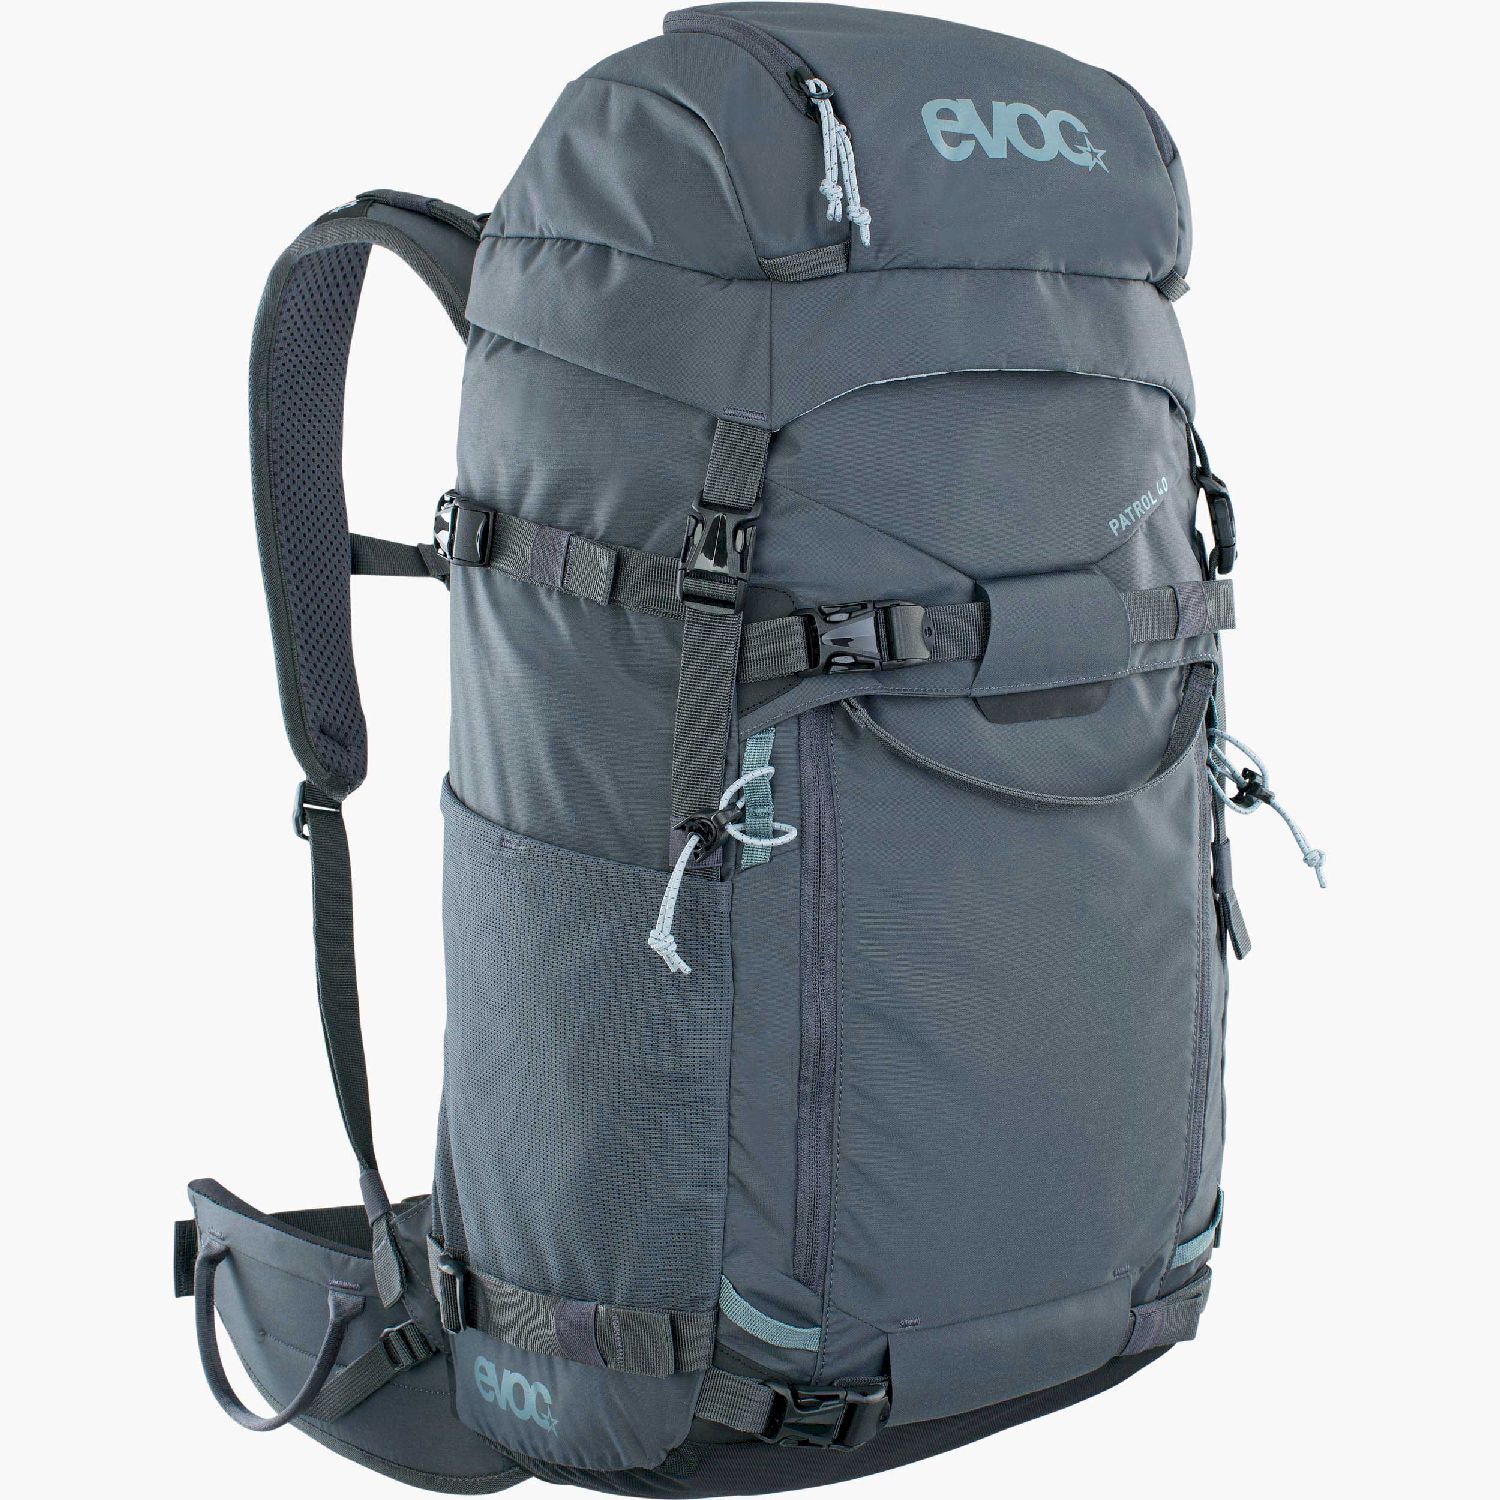 Evoc Patrol 40 - Ski backpack